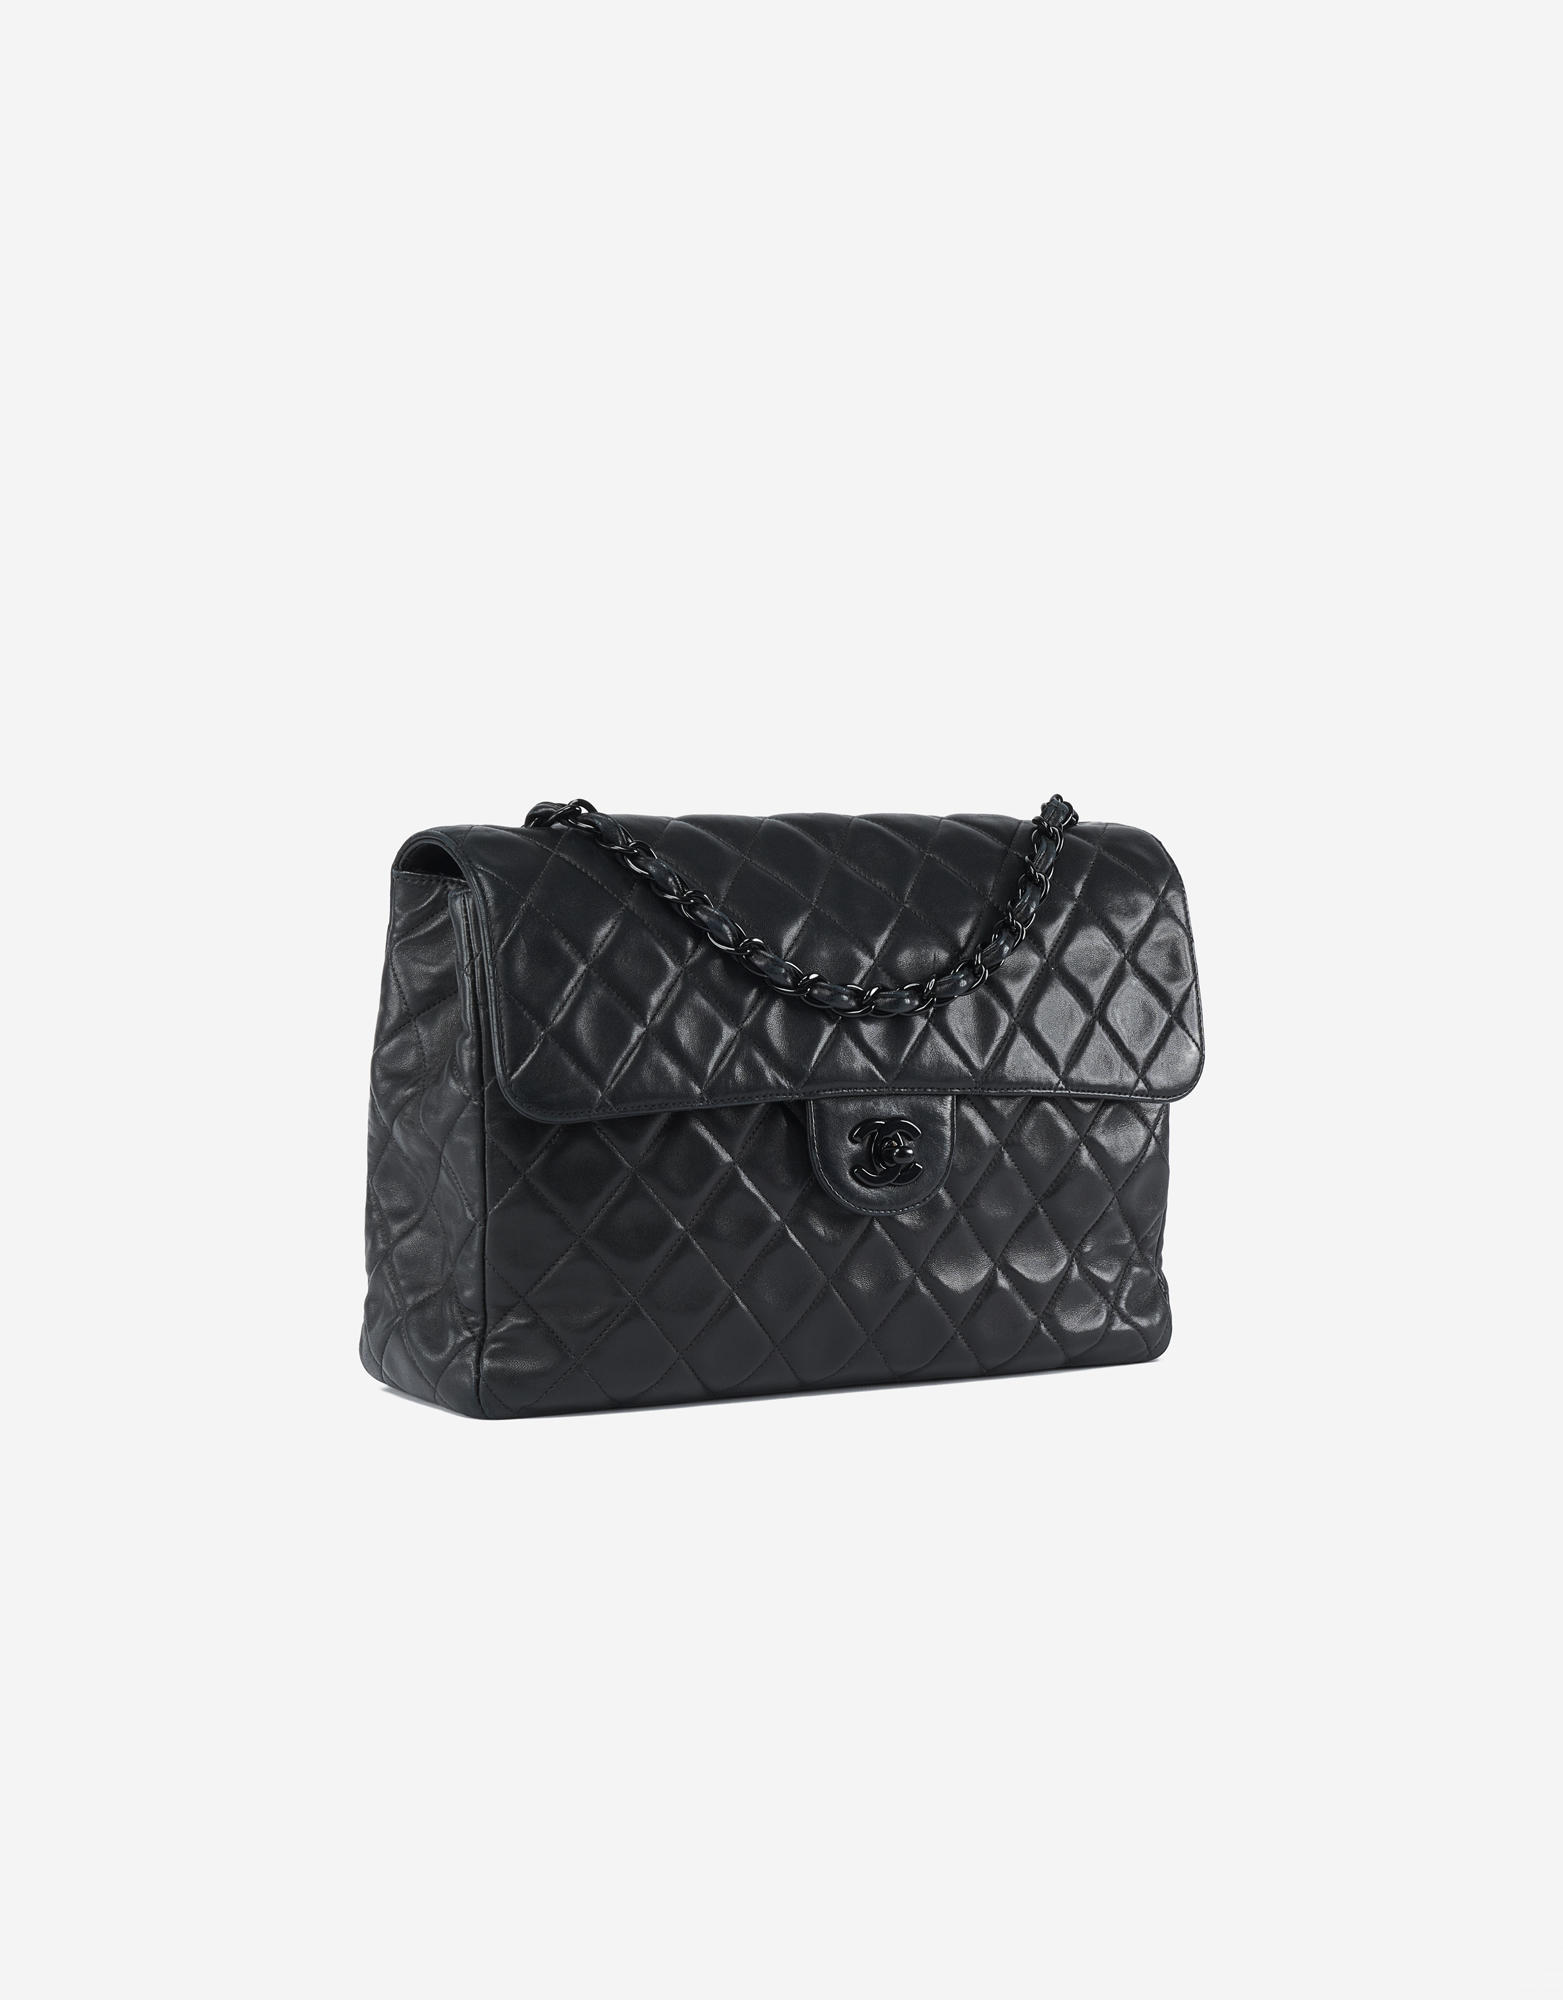 Chanel Timeless Jumbo So Black Lamb Leather Bag